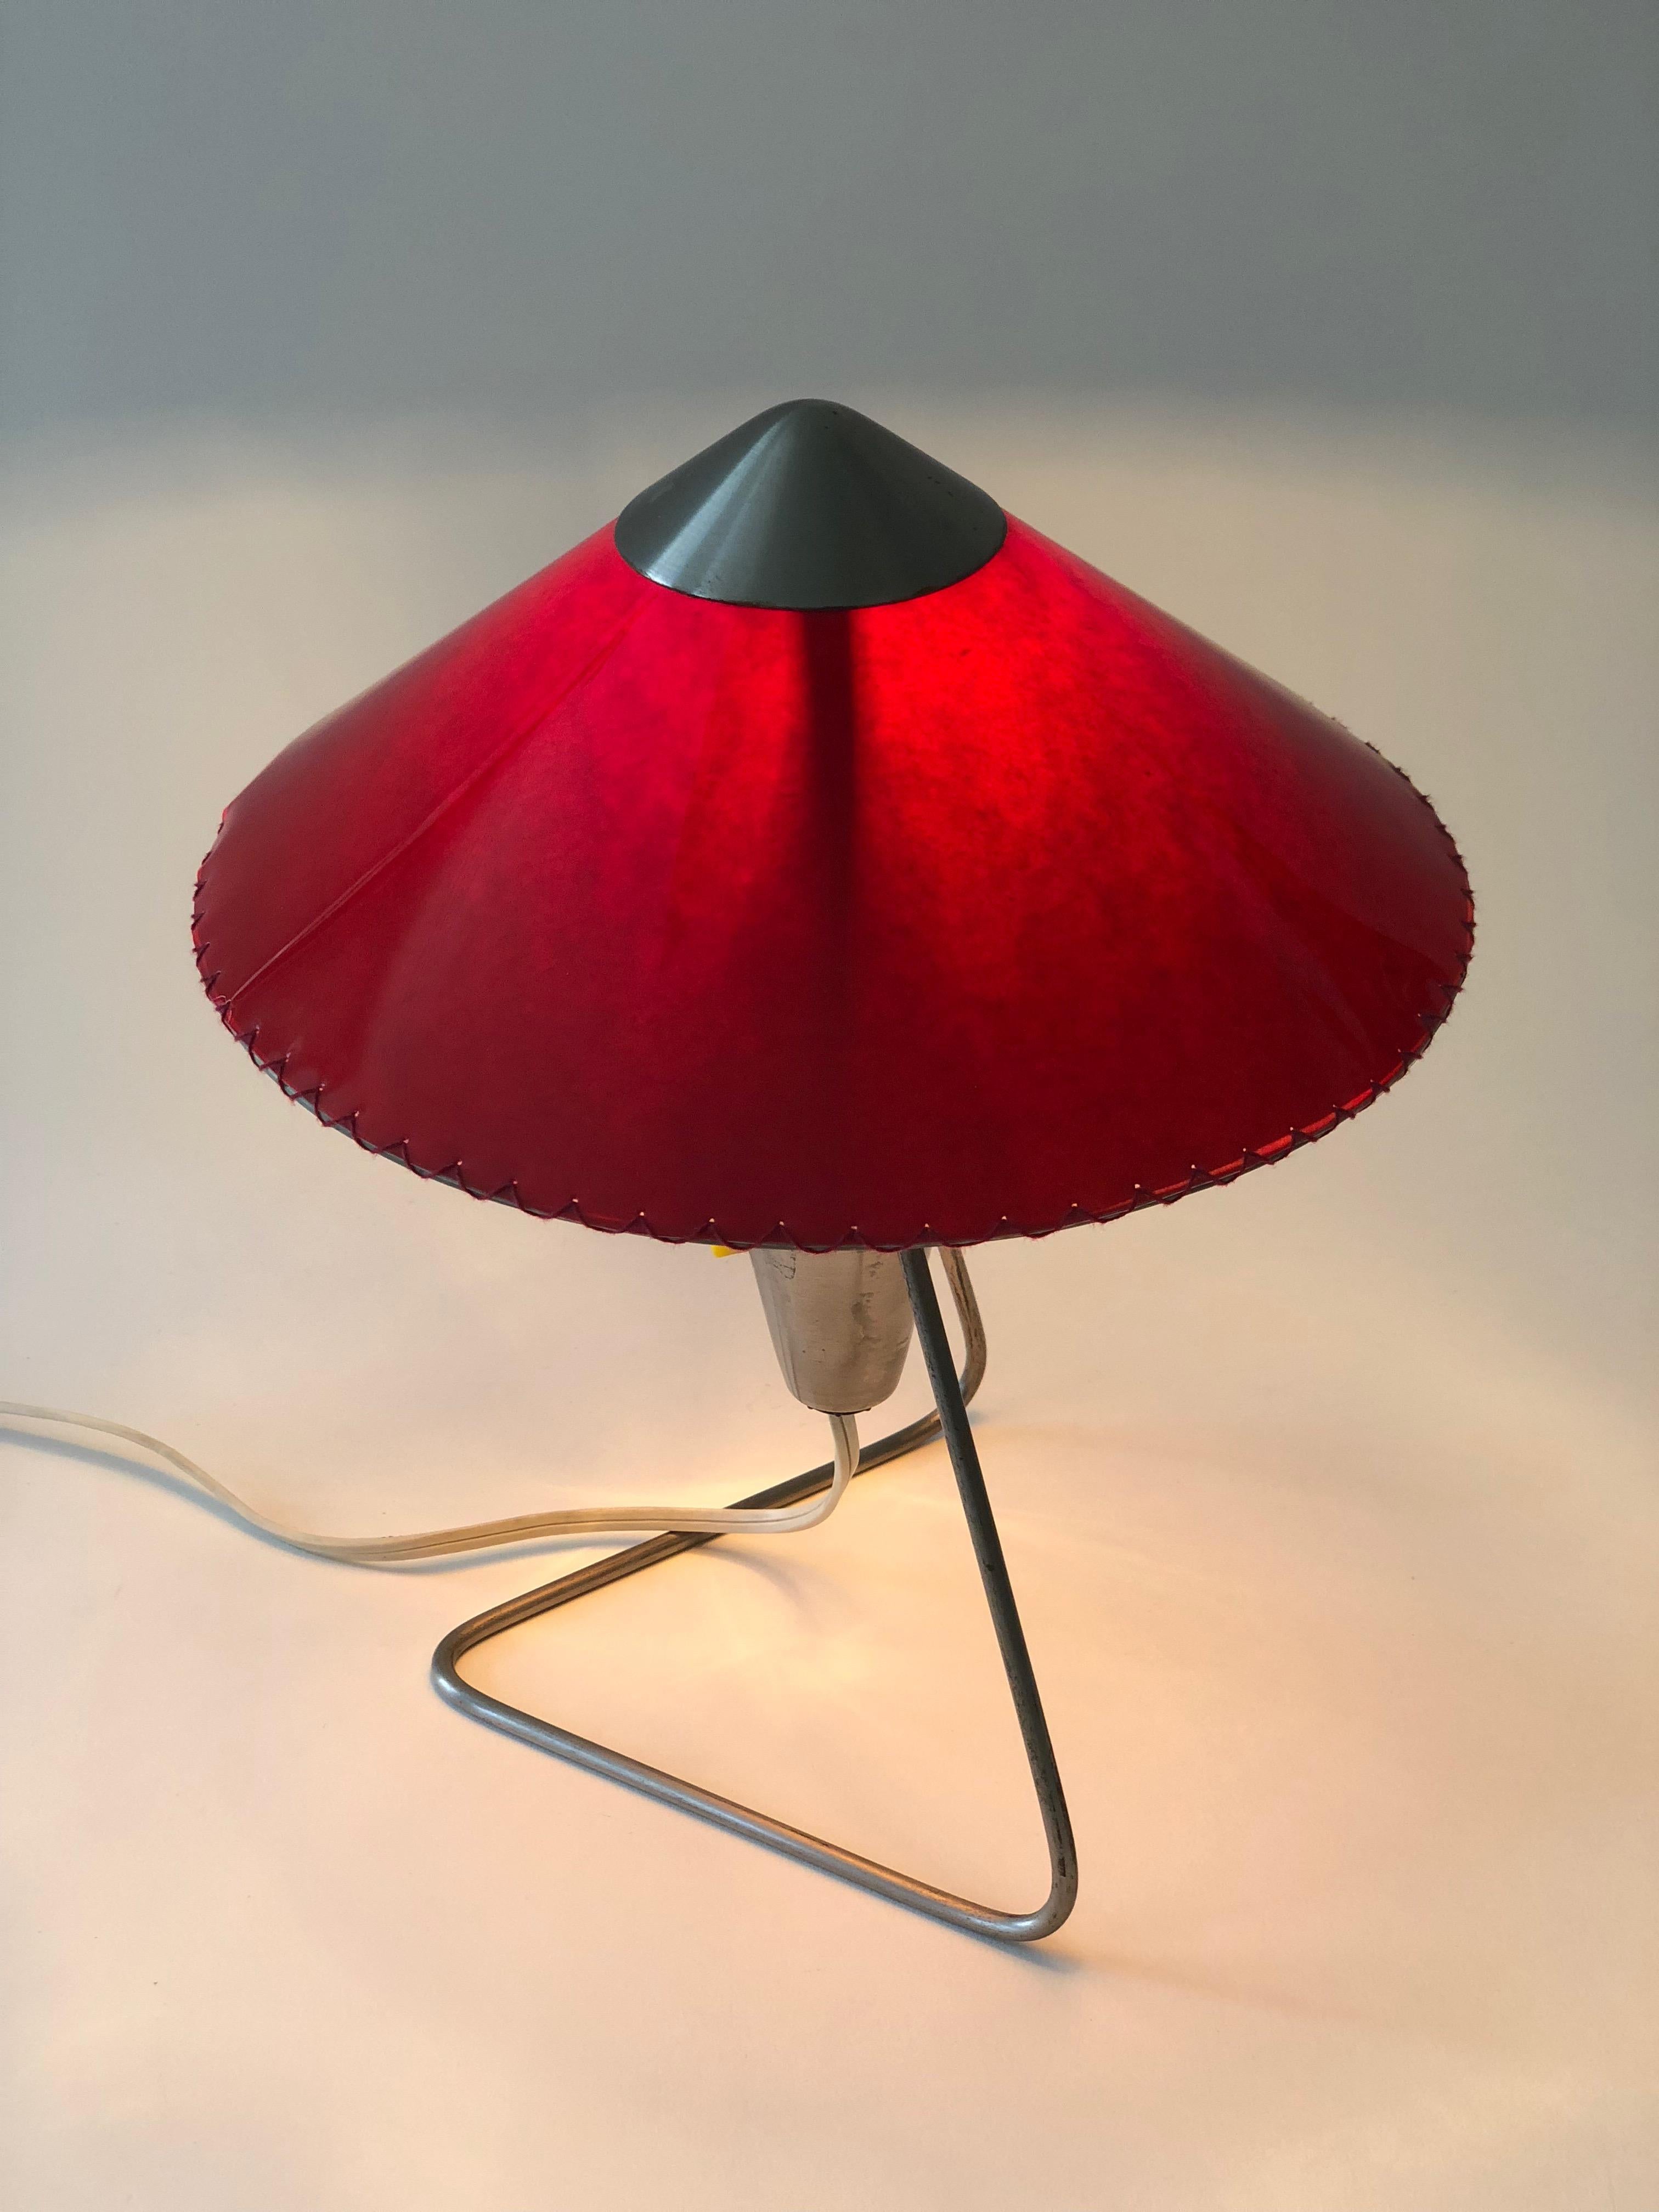 Czech Modernist Desk Lamp by Helena Frantova, 1953 For Sale 5